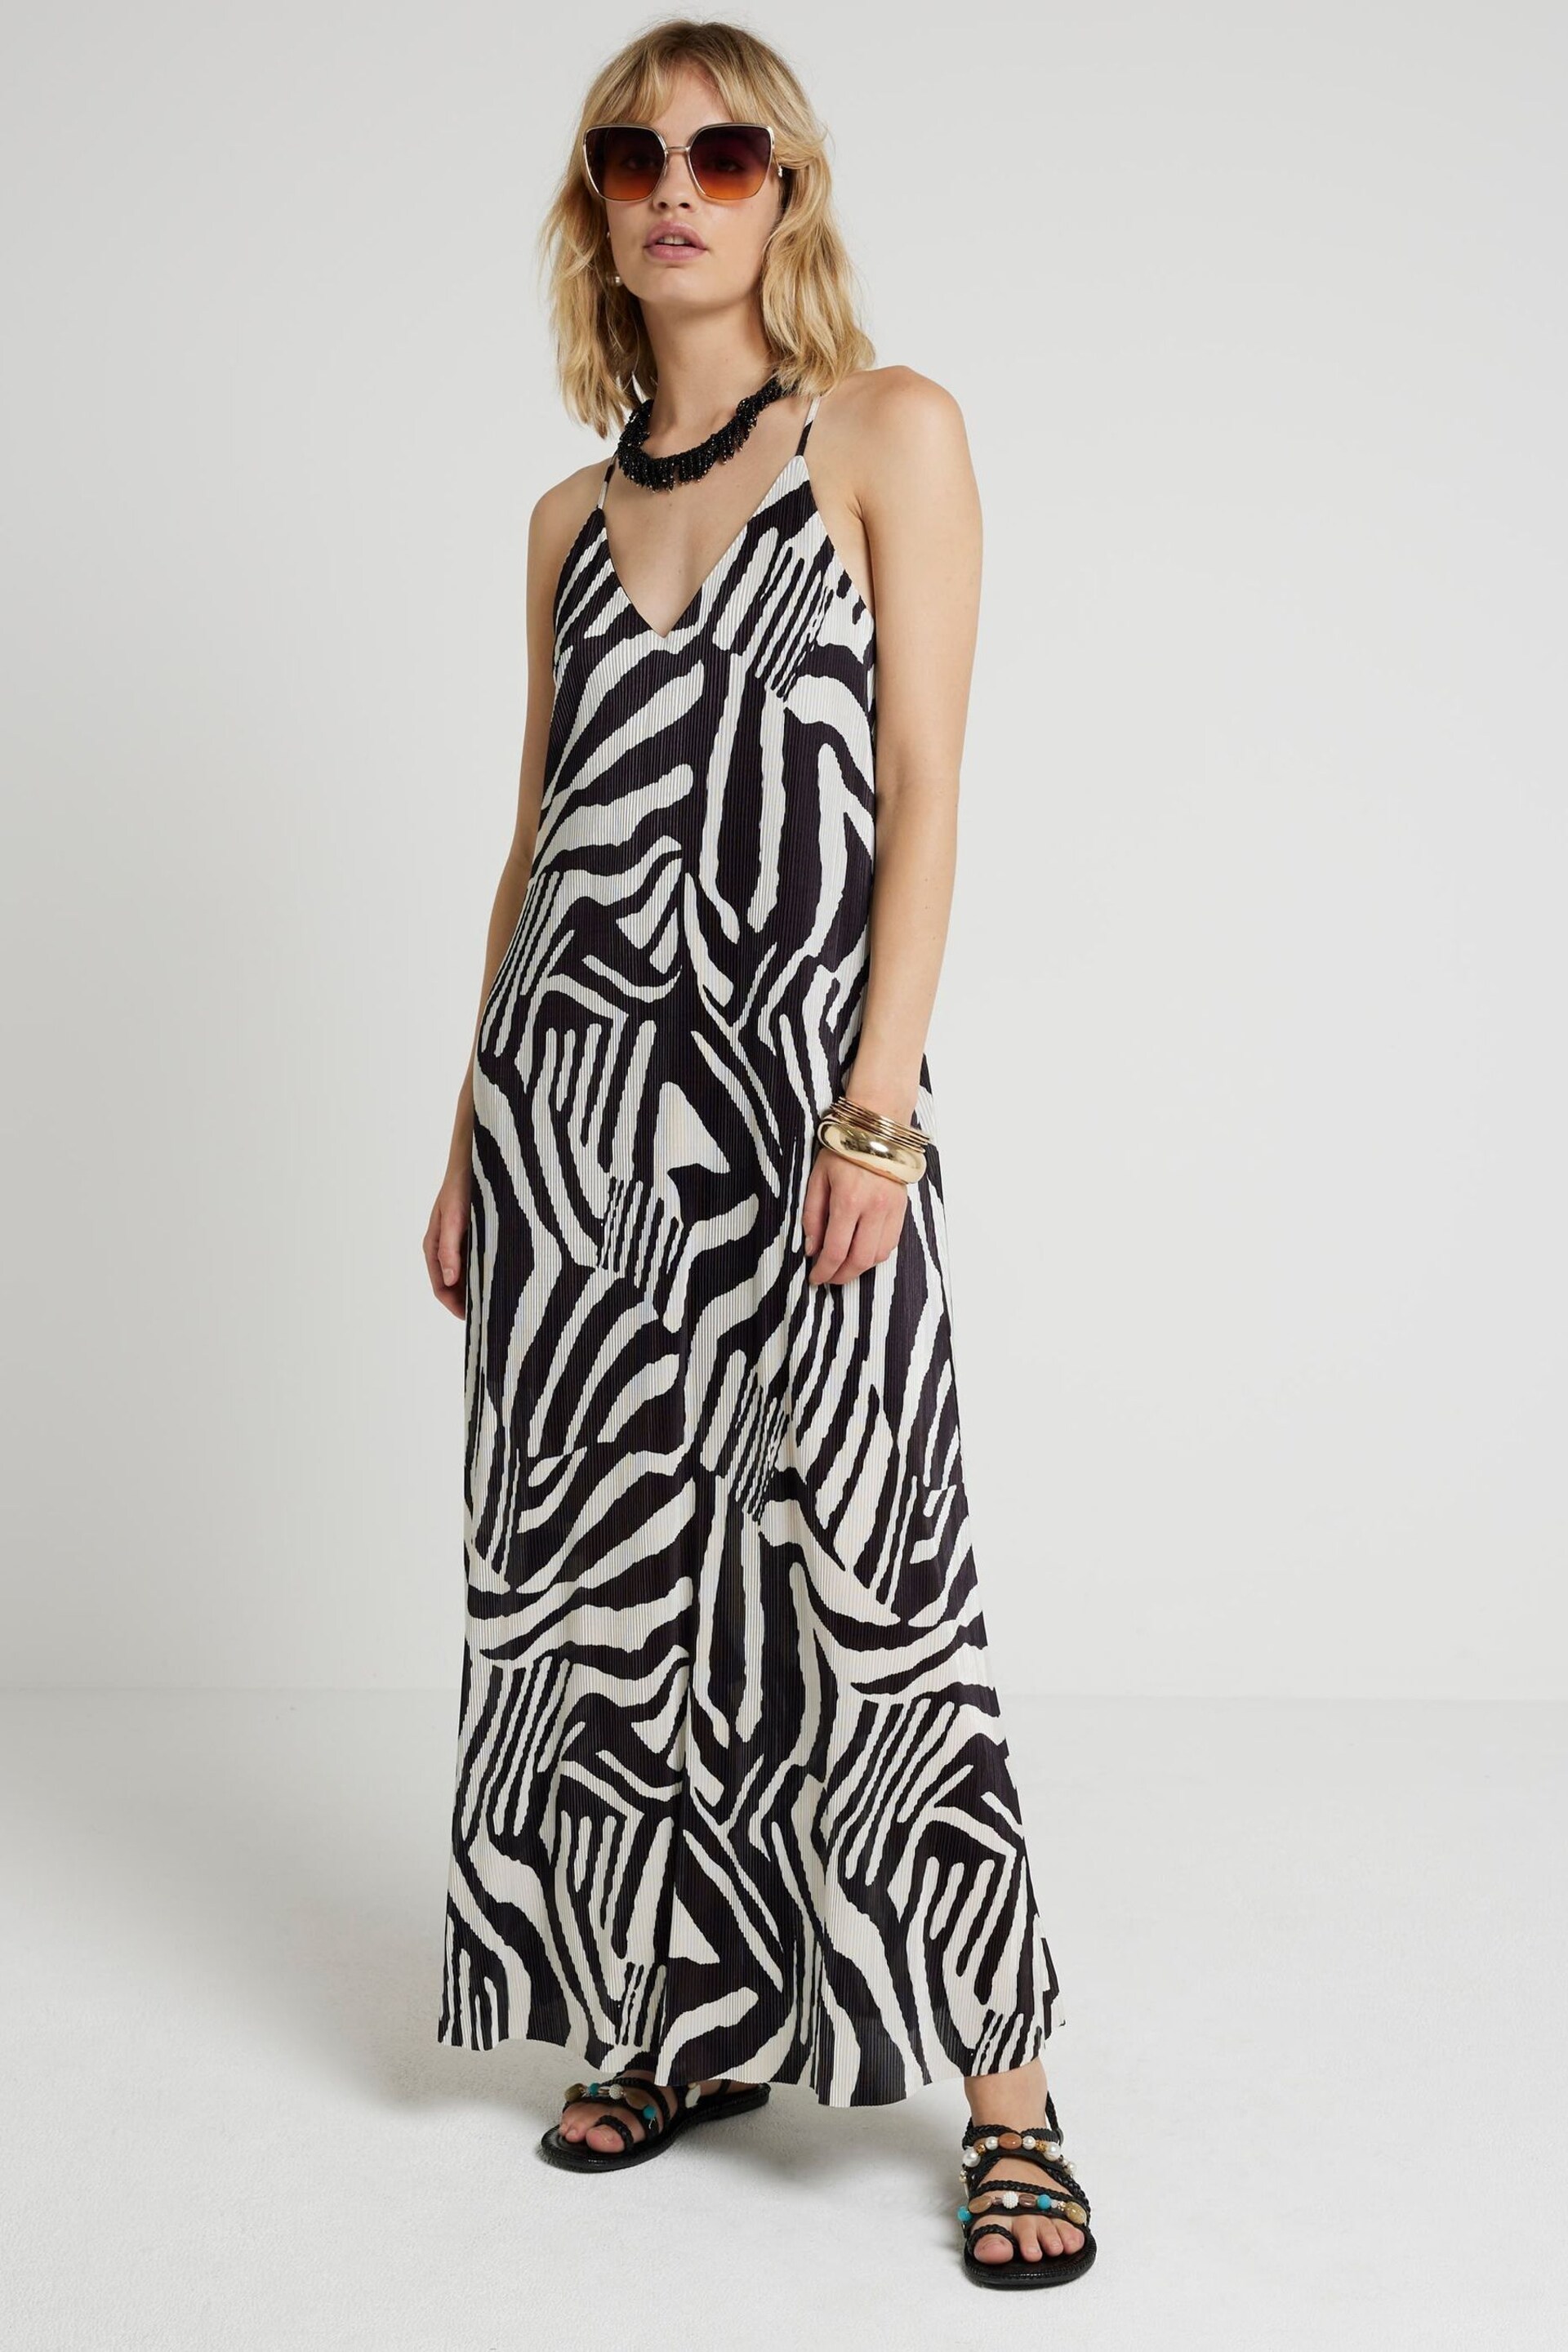 River Island Black Zebra Print V-Neck Maxi Dress - Image 1 of 5